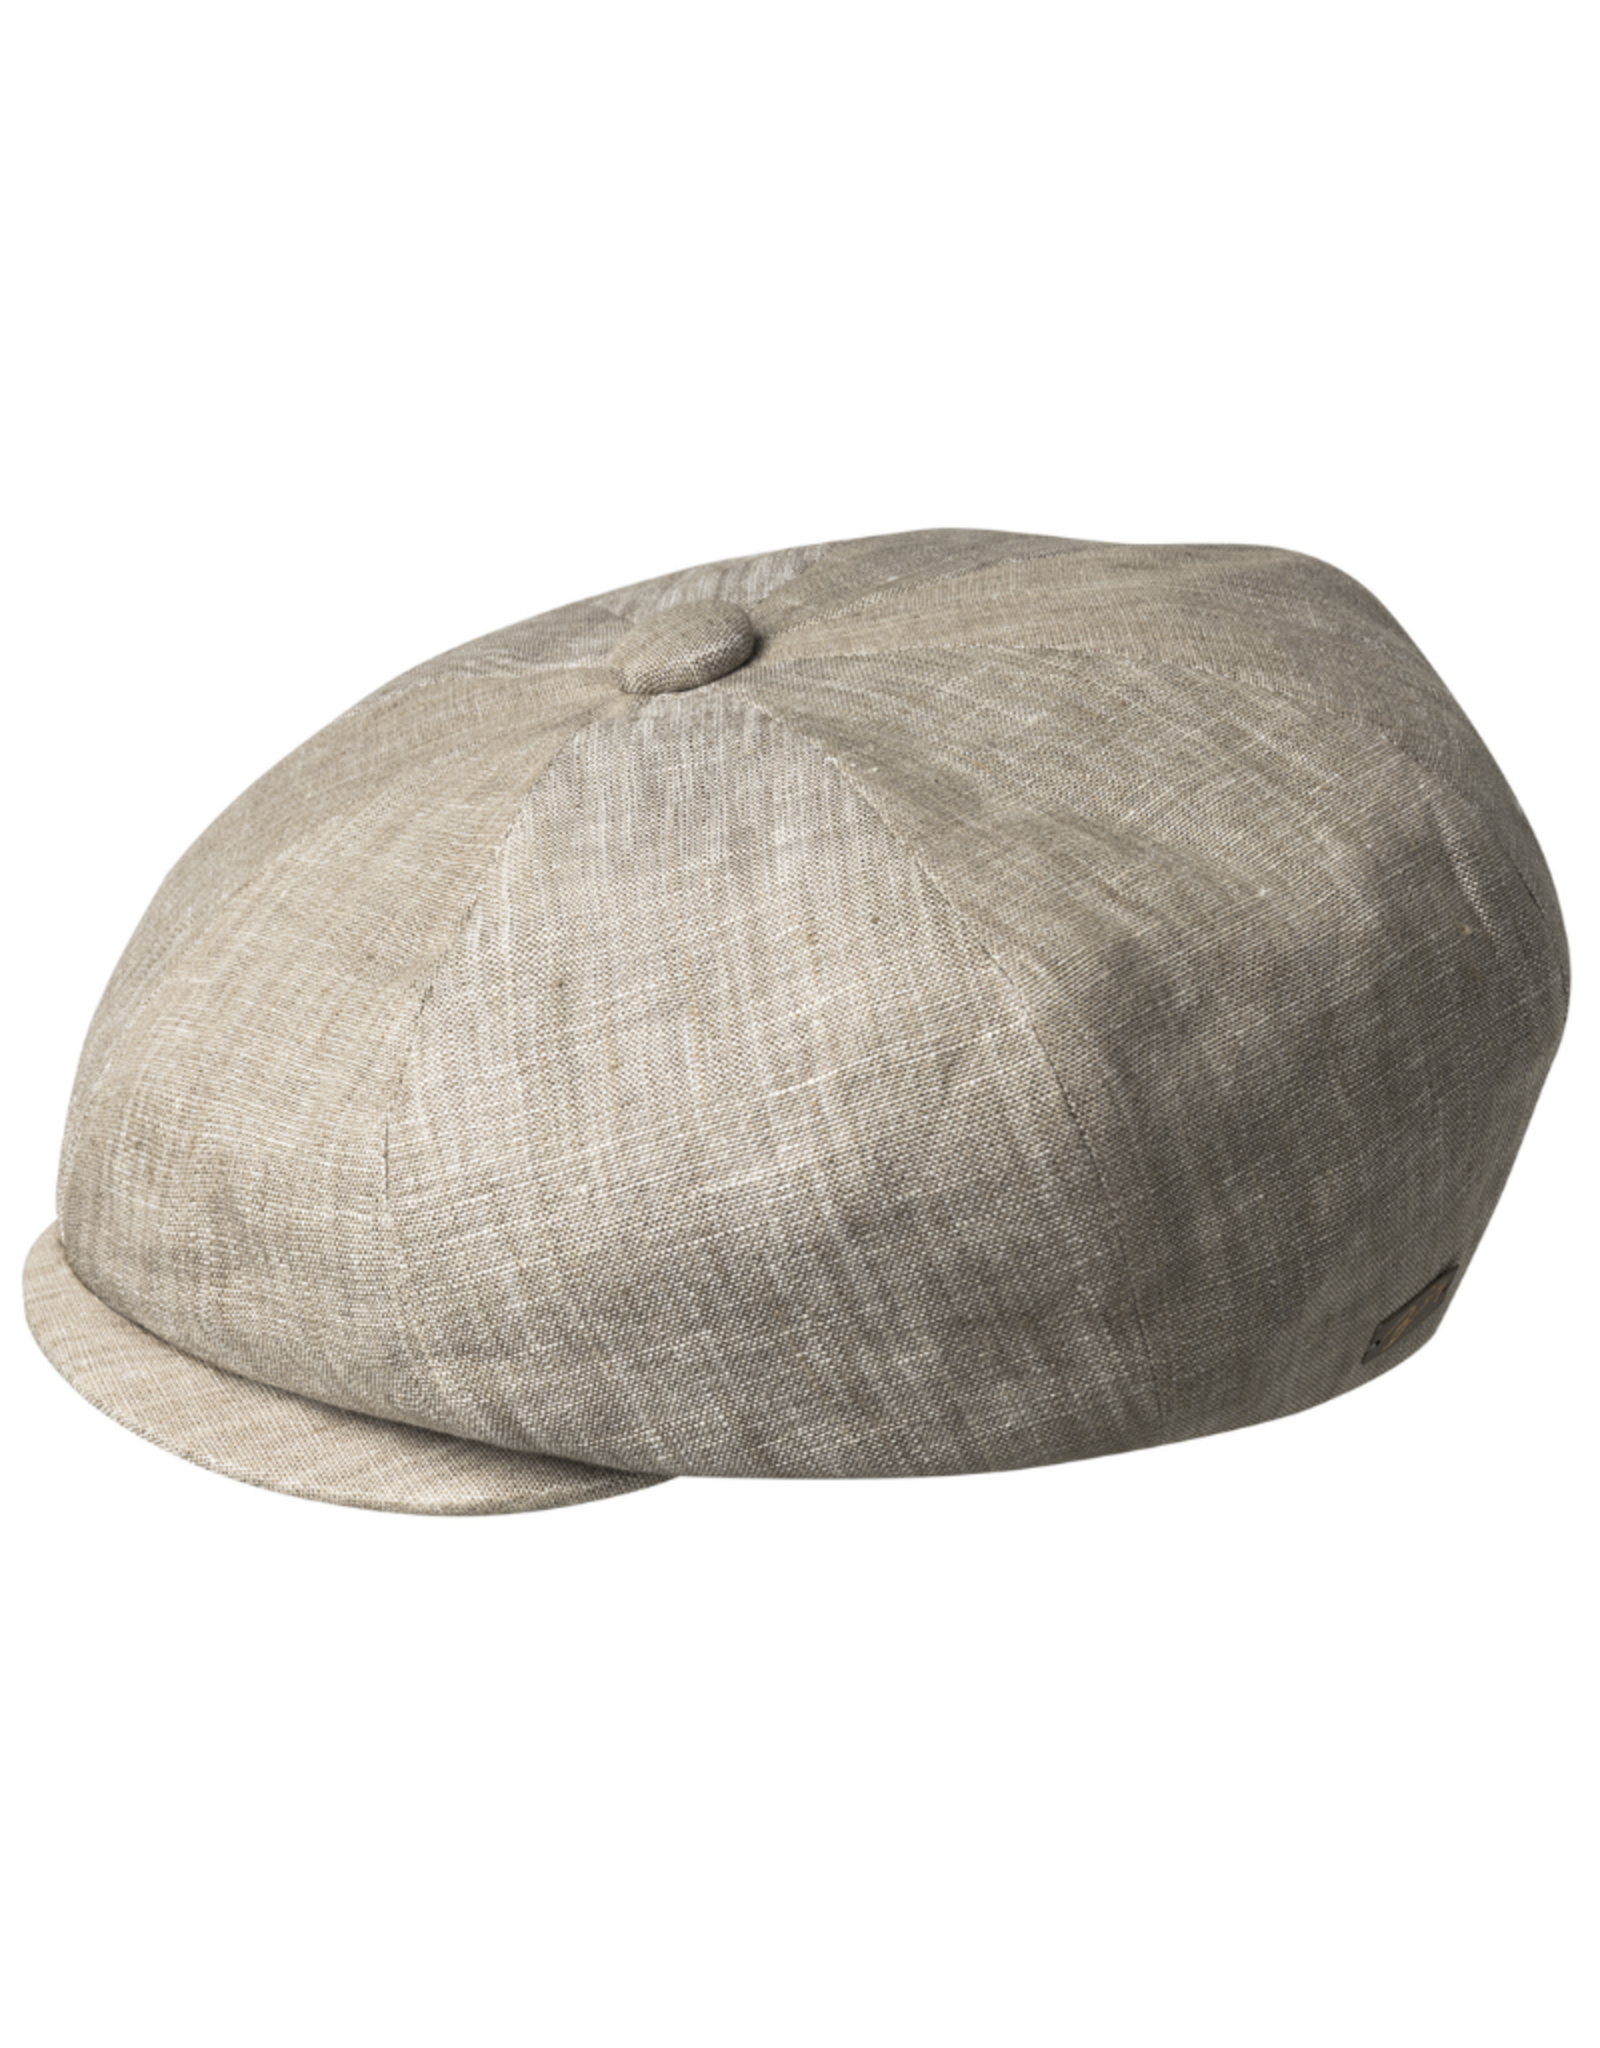 Bailey Hat Co. HAT-NEWSBOY "SHAWK" 5 PANEL